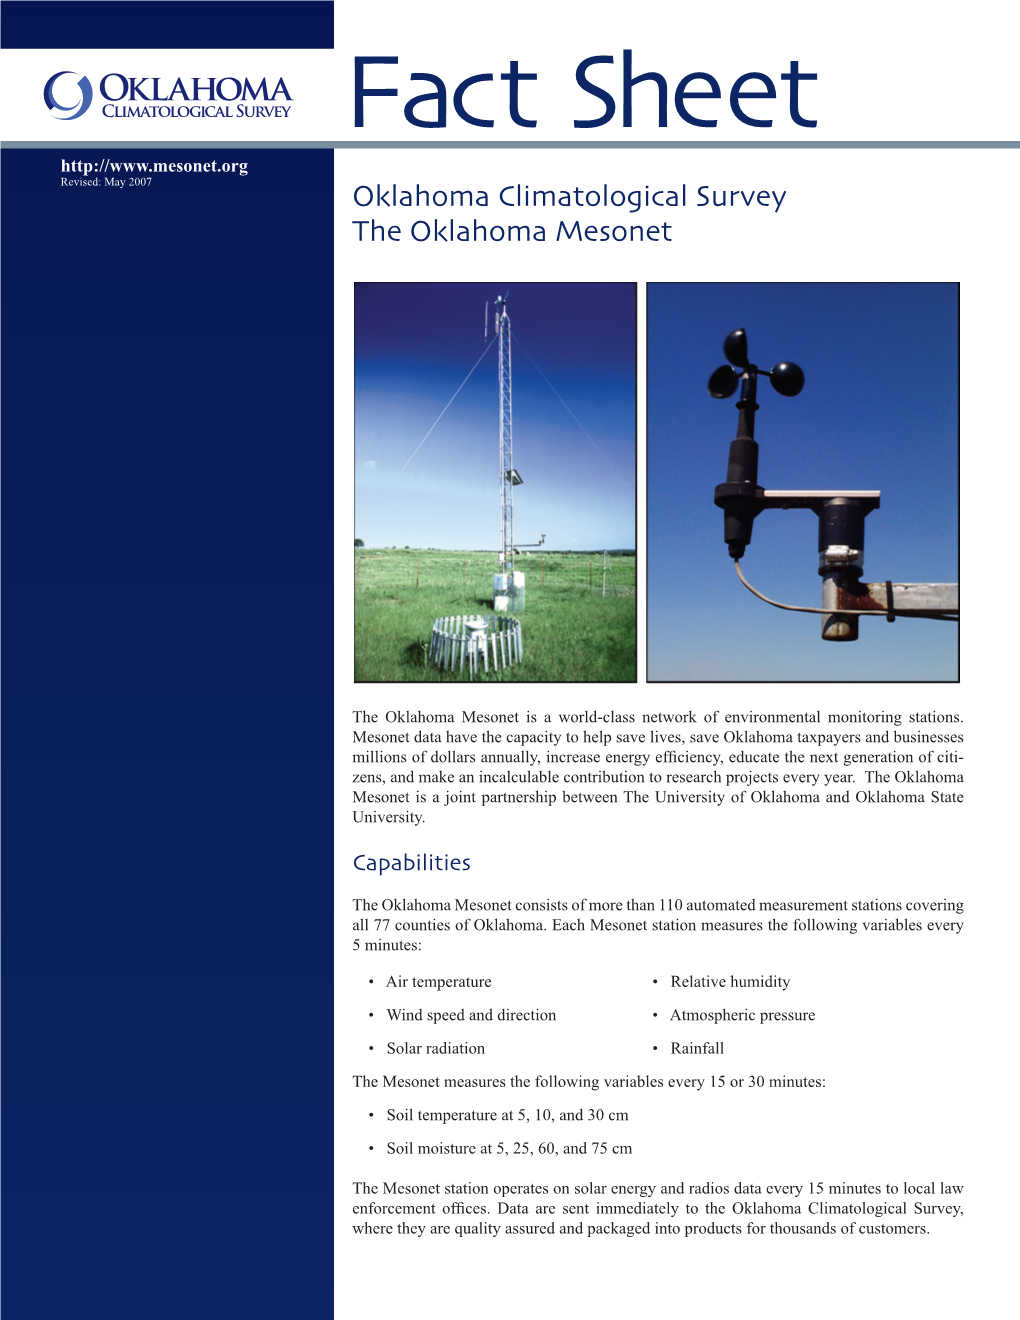 Oklahoma Climatological Survey – the Oklahoma Mesonet